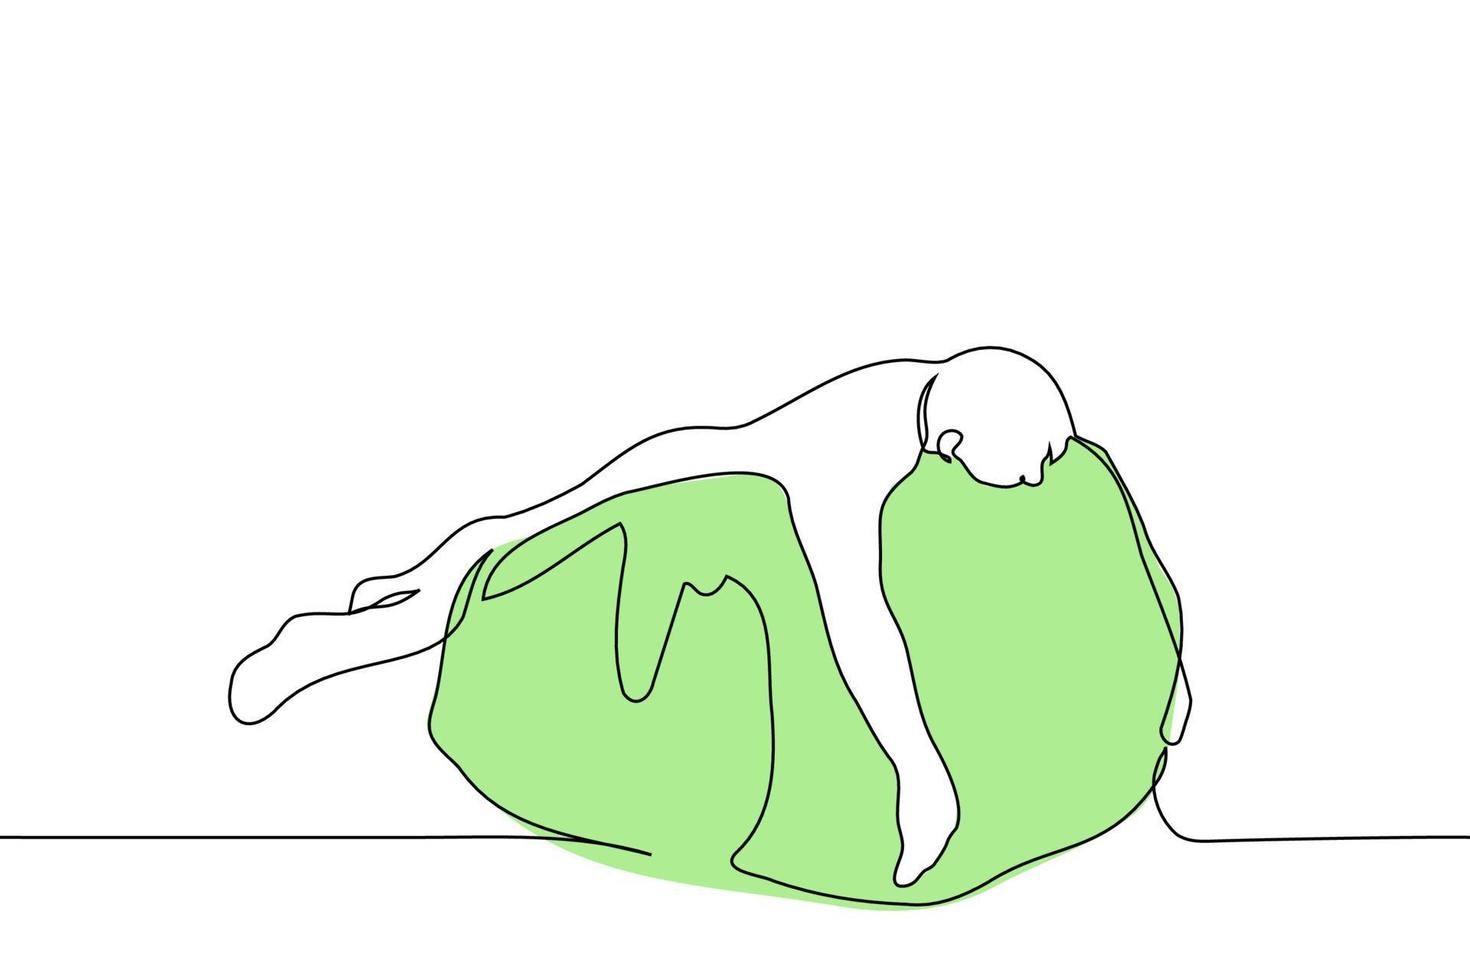 man lies belly down on an armchair pillow - one line drawing vector. concept fatigue, wallow, procrastination vector